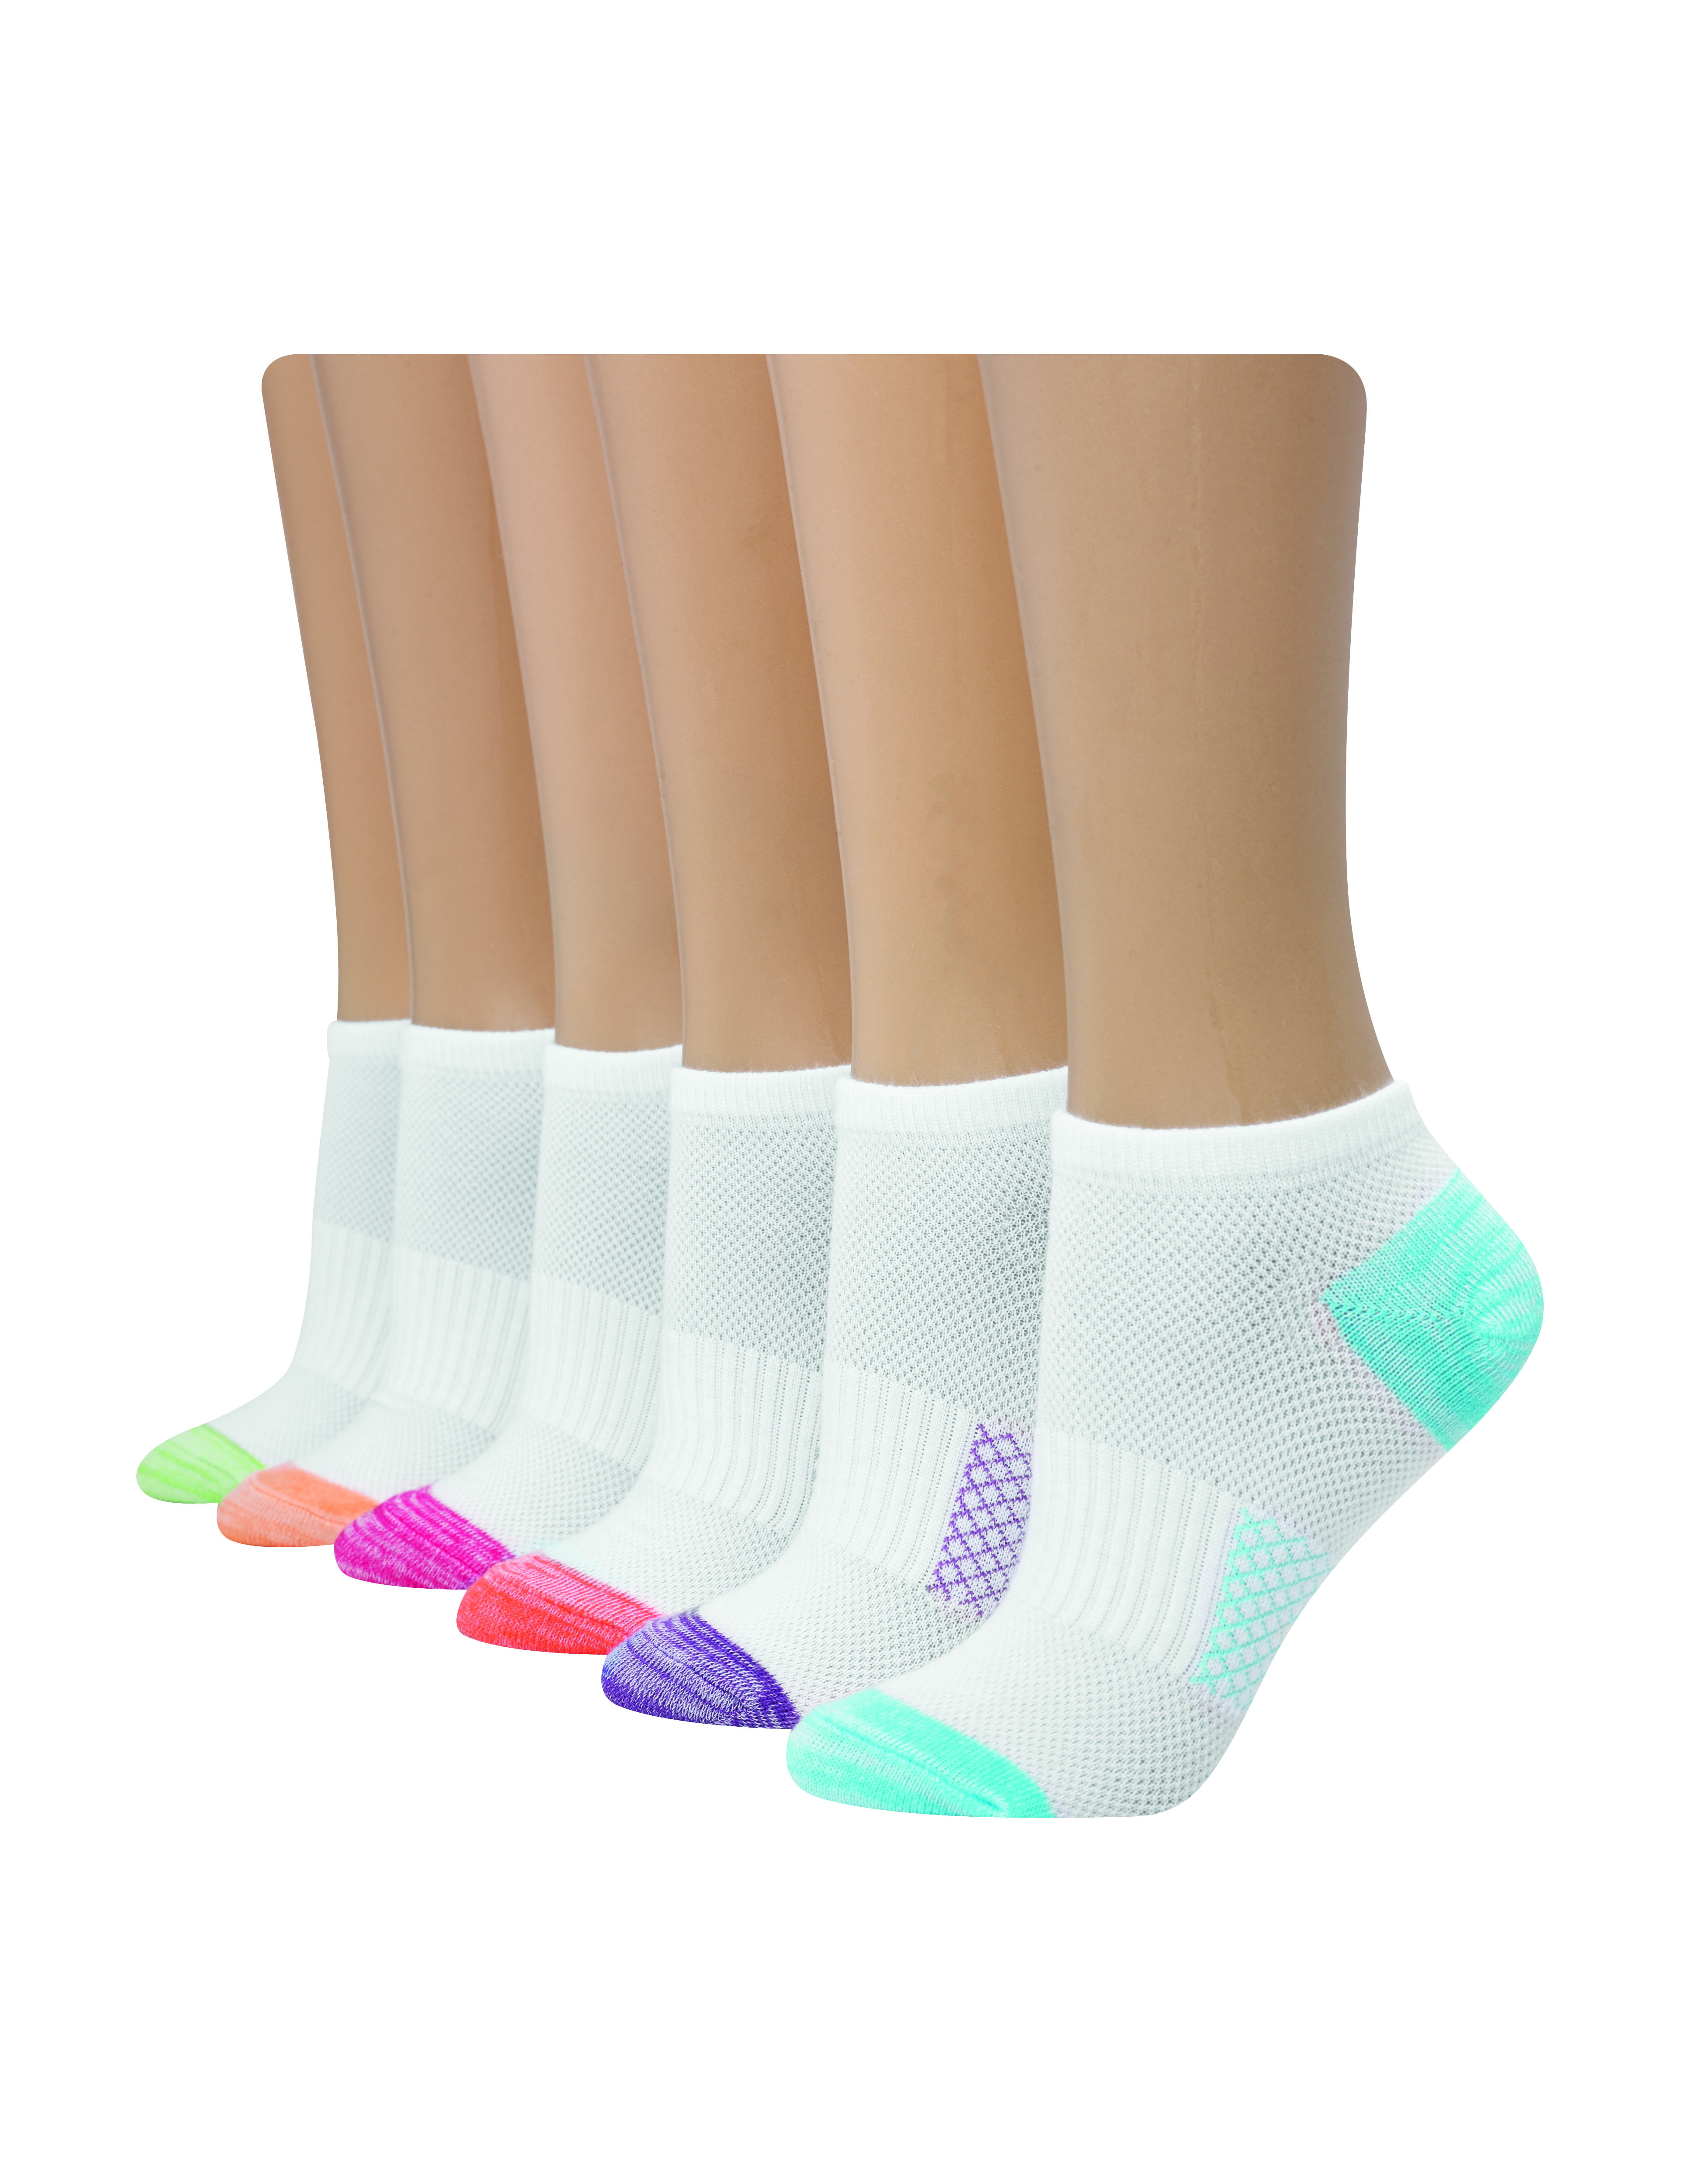 Hanes Women's Comfort Cool Lightweight No-Show Socks 6 pack - Walmart.com